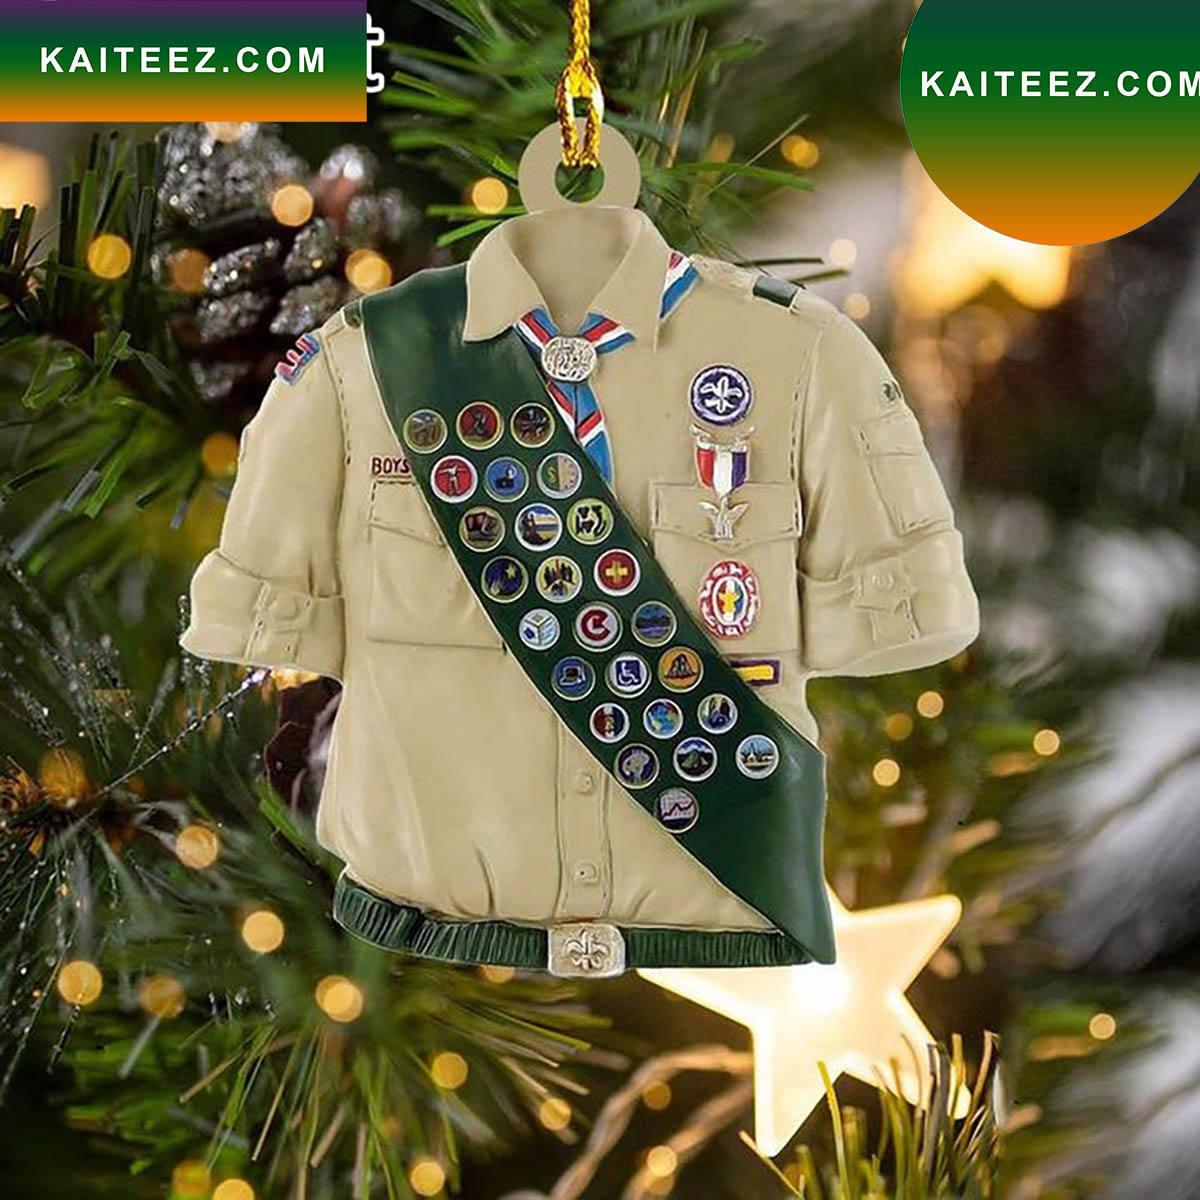 Boy Scouts Of America Christmas Ornament Kaiteez